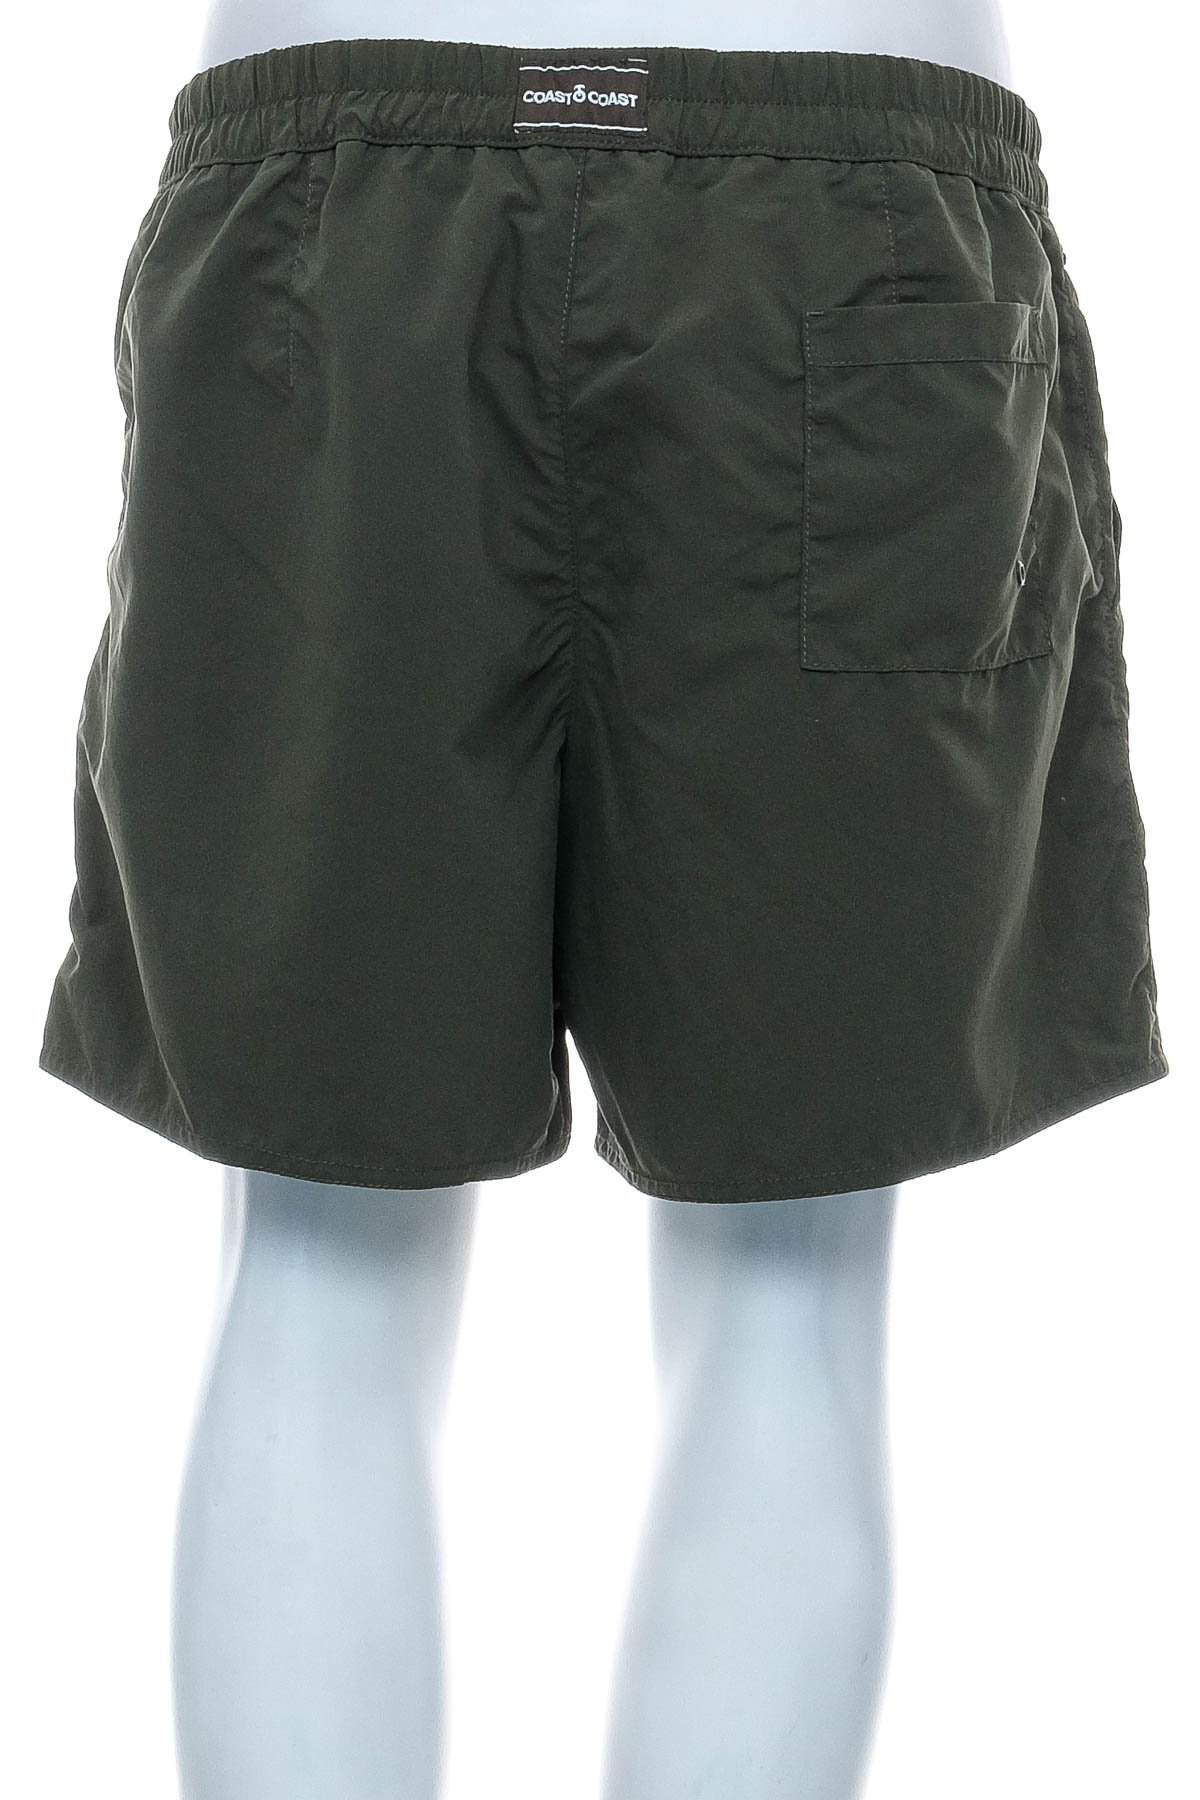 Men's shorts - CALZEDONIA - 1